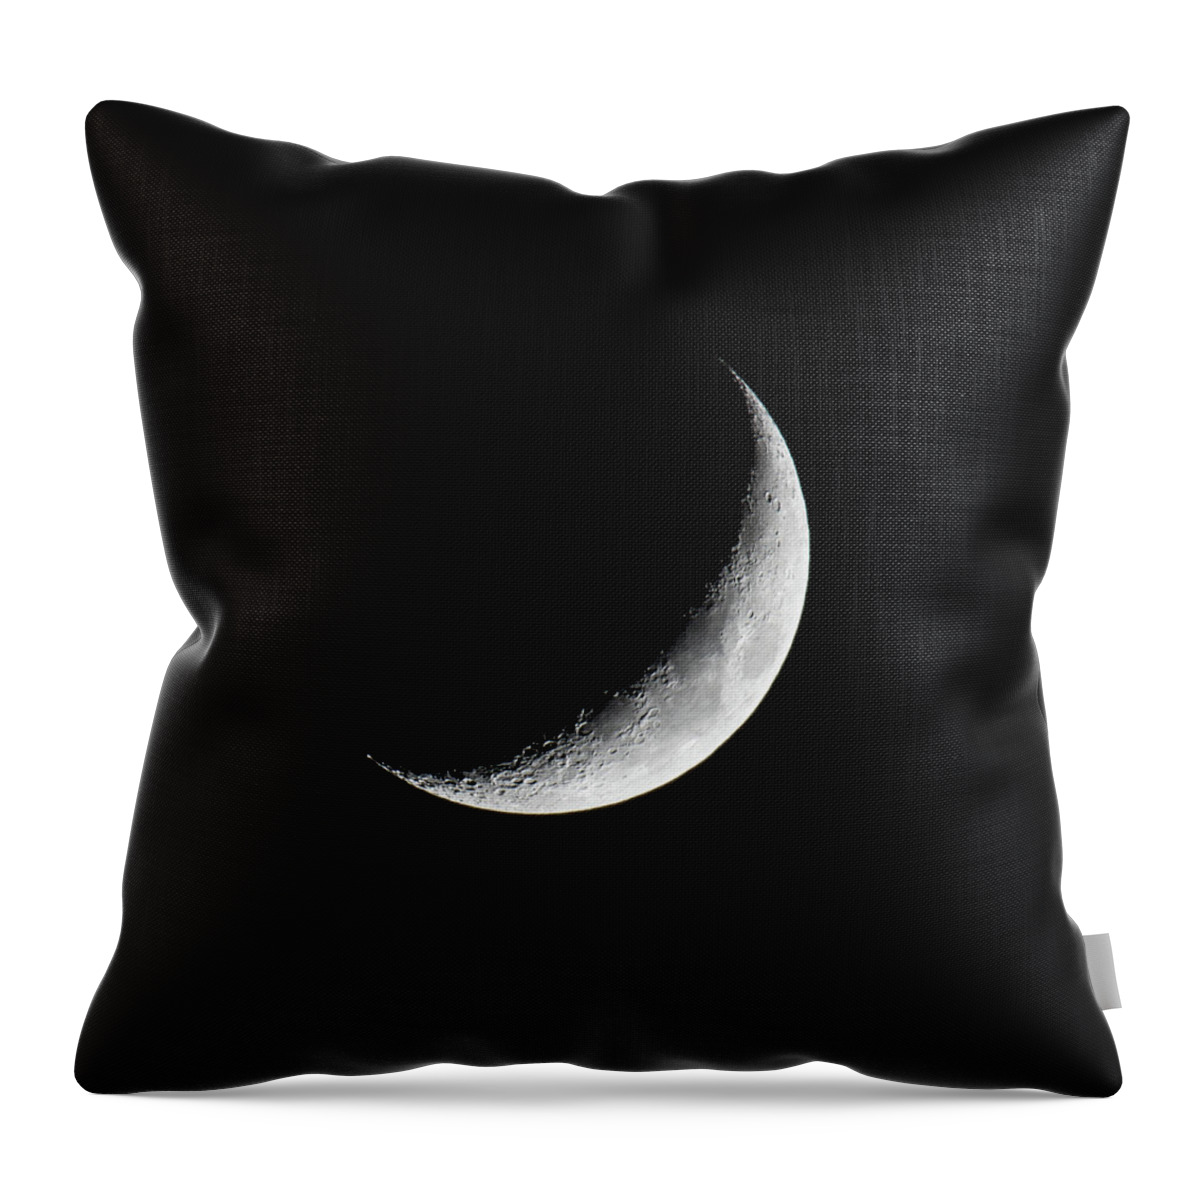 Crescent Moon Throw Pillow featuring the photograph Crescent Moon by Darryl Hendricks